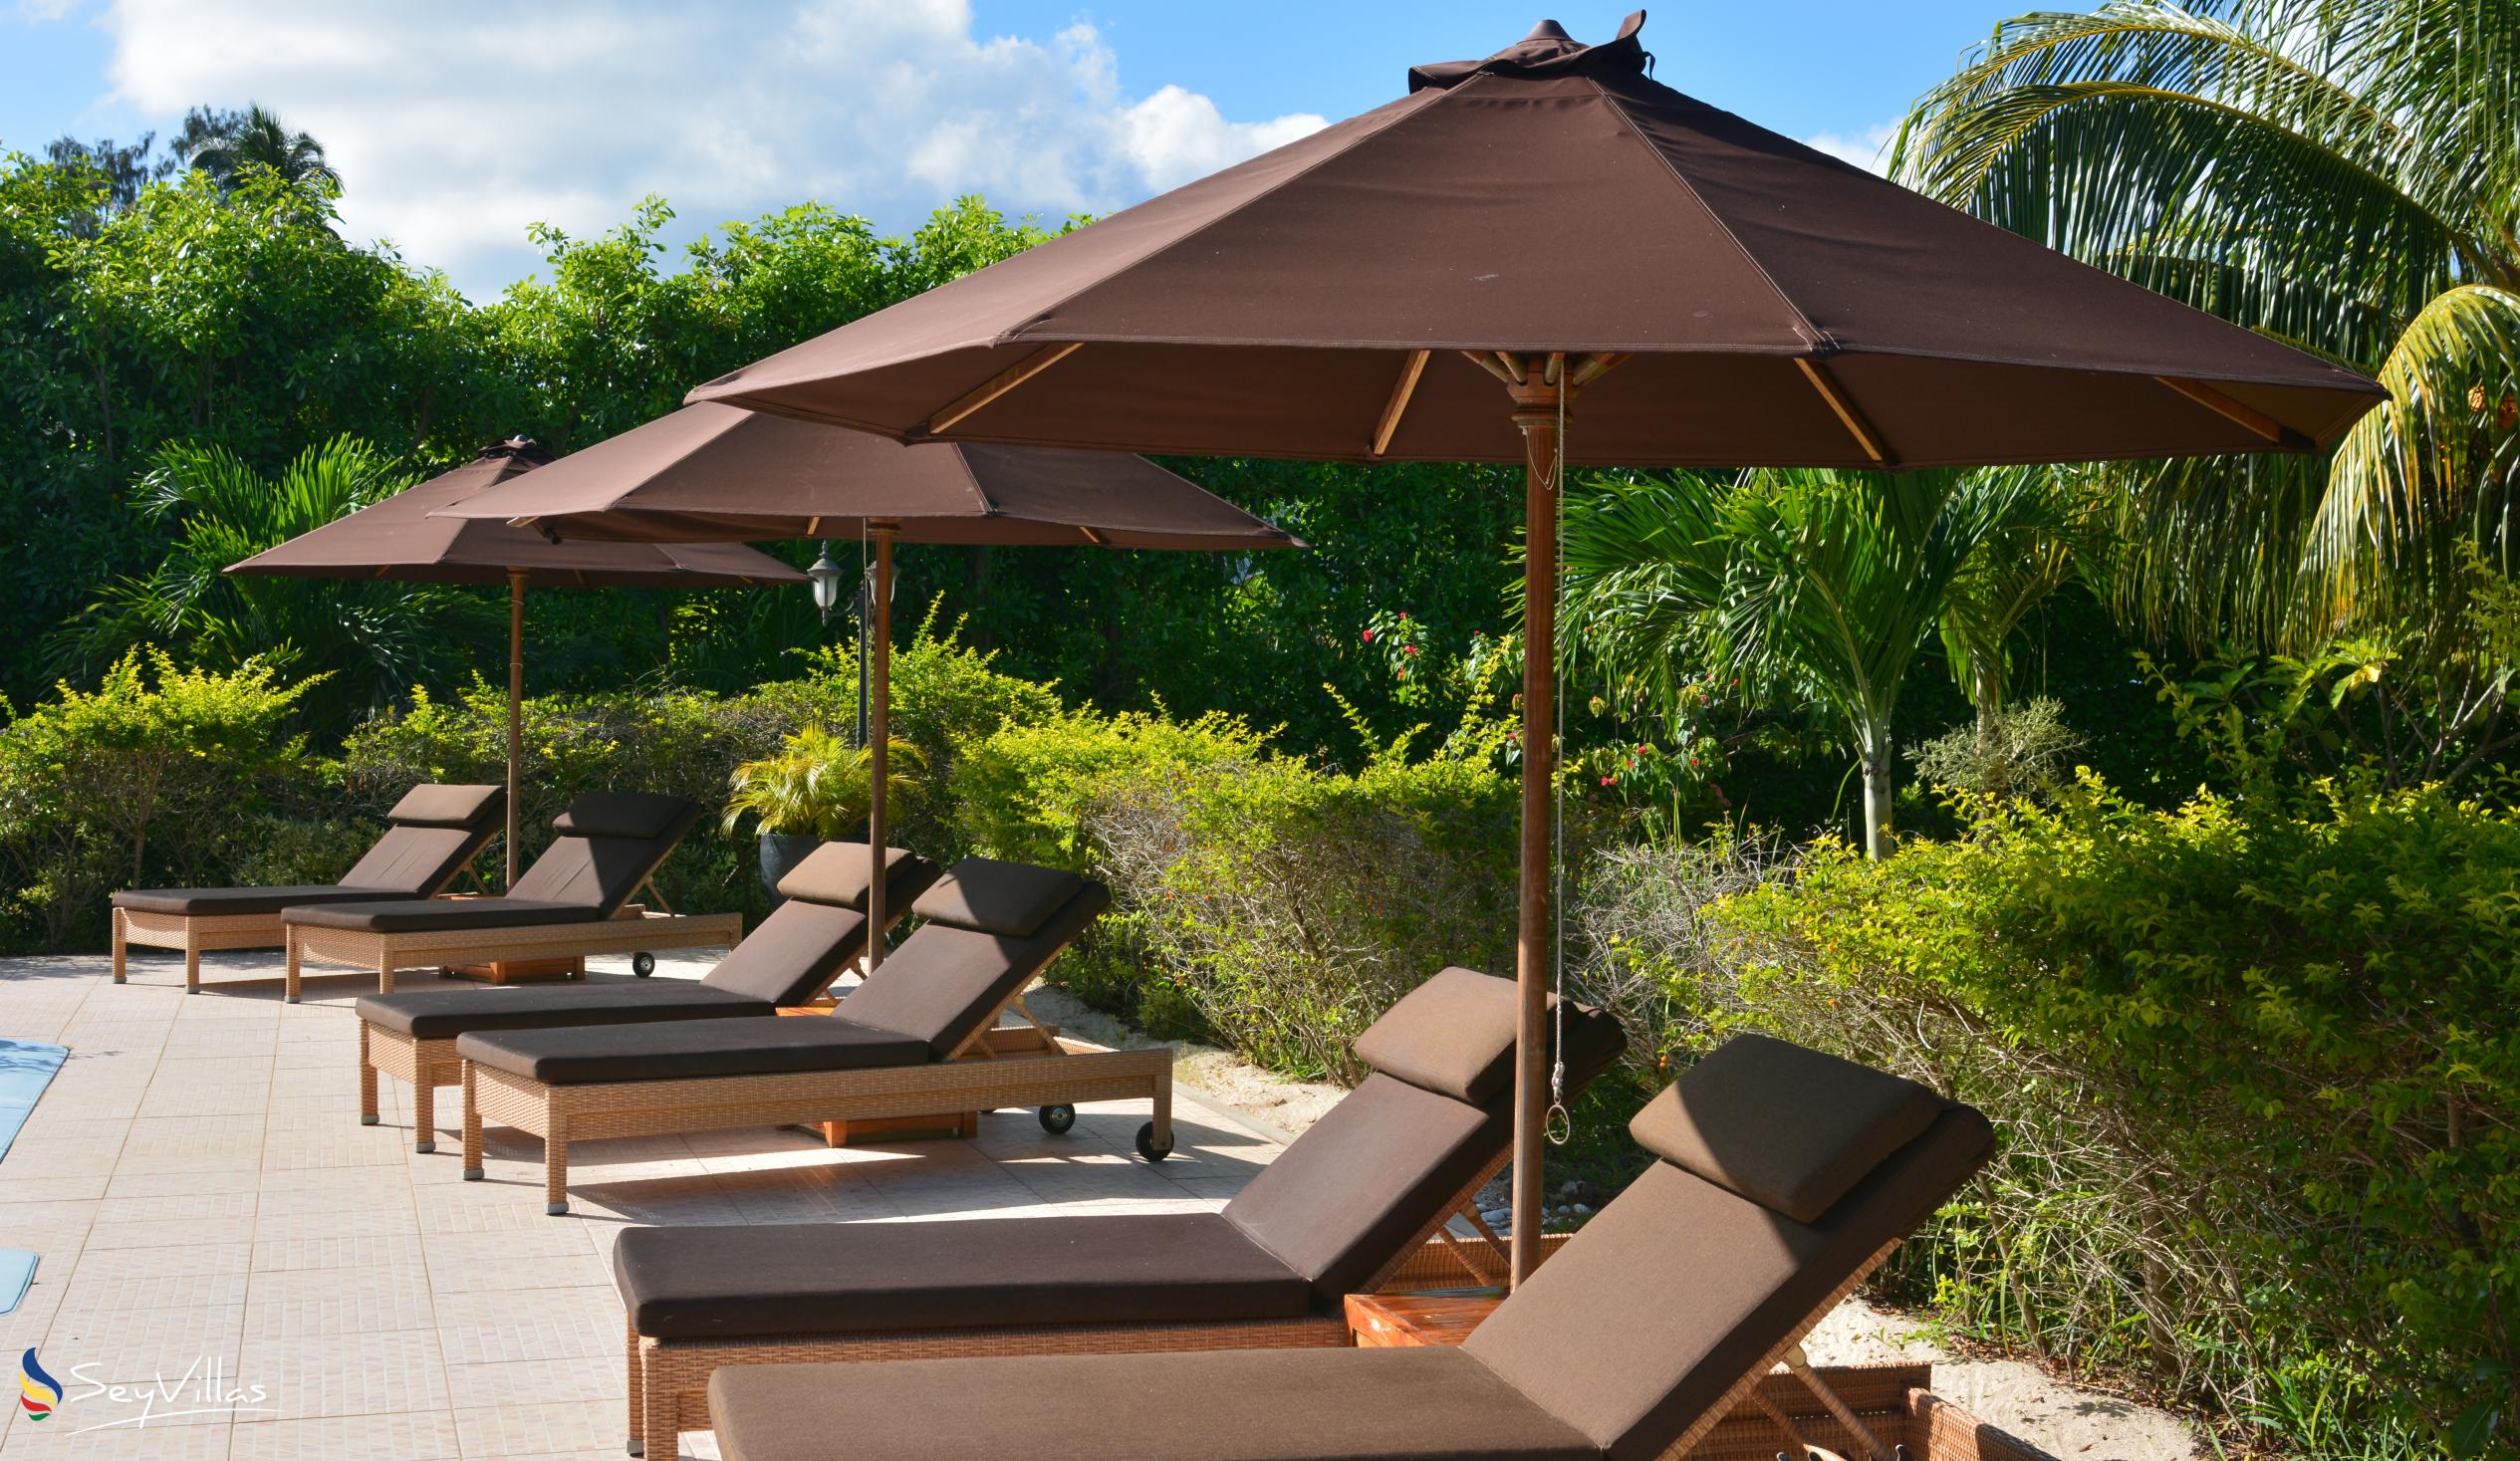 Photo 9: Villa de Cerf - Outdoor area - Cerf Island (Seychelles)